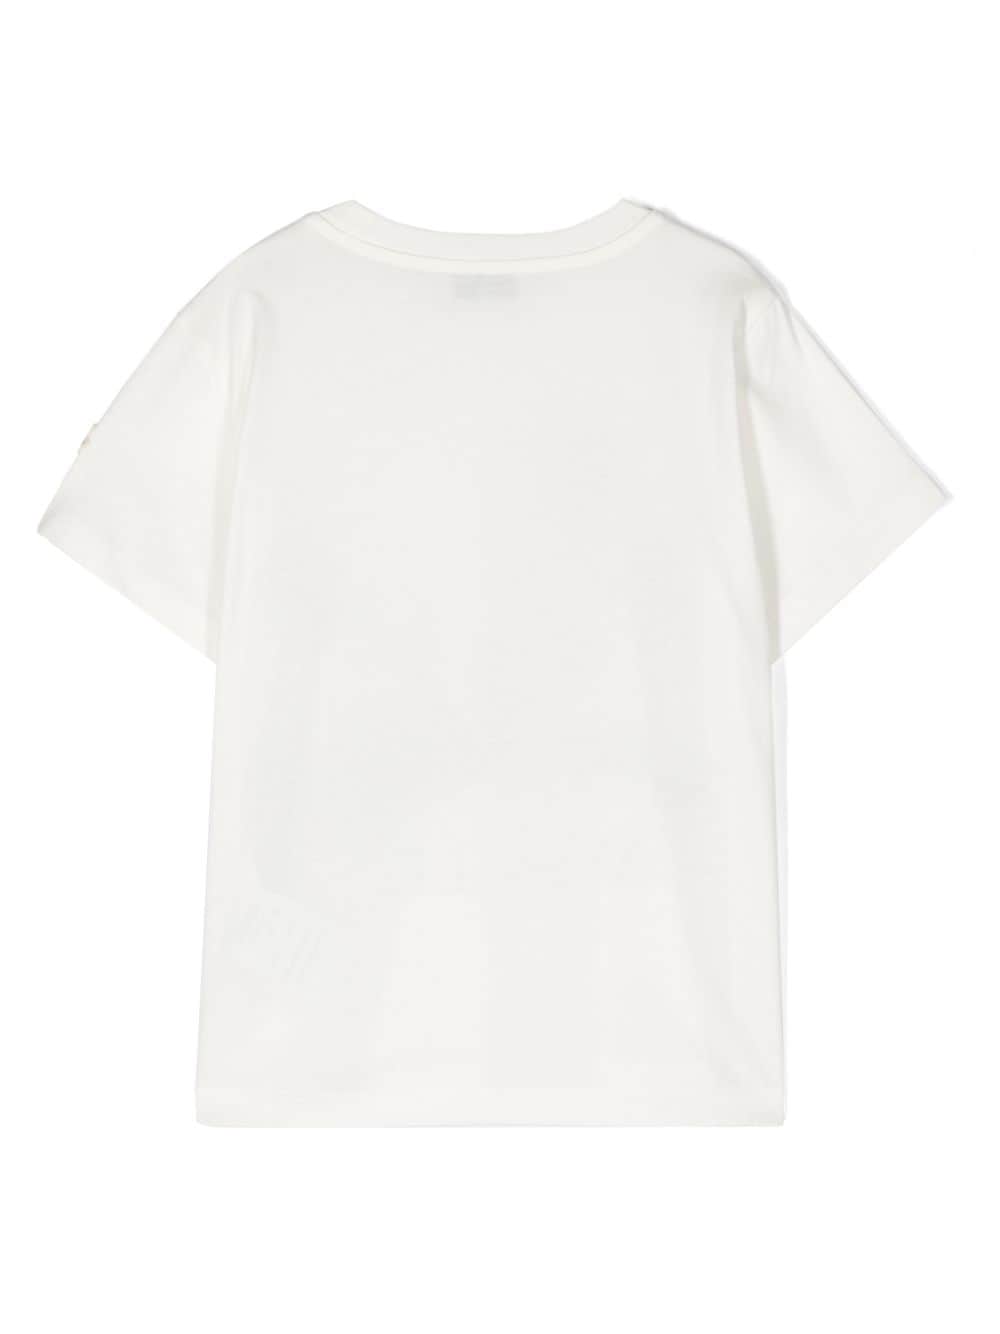 T-shirt bambino bianco ottico